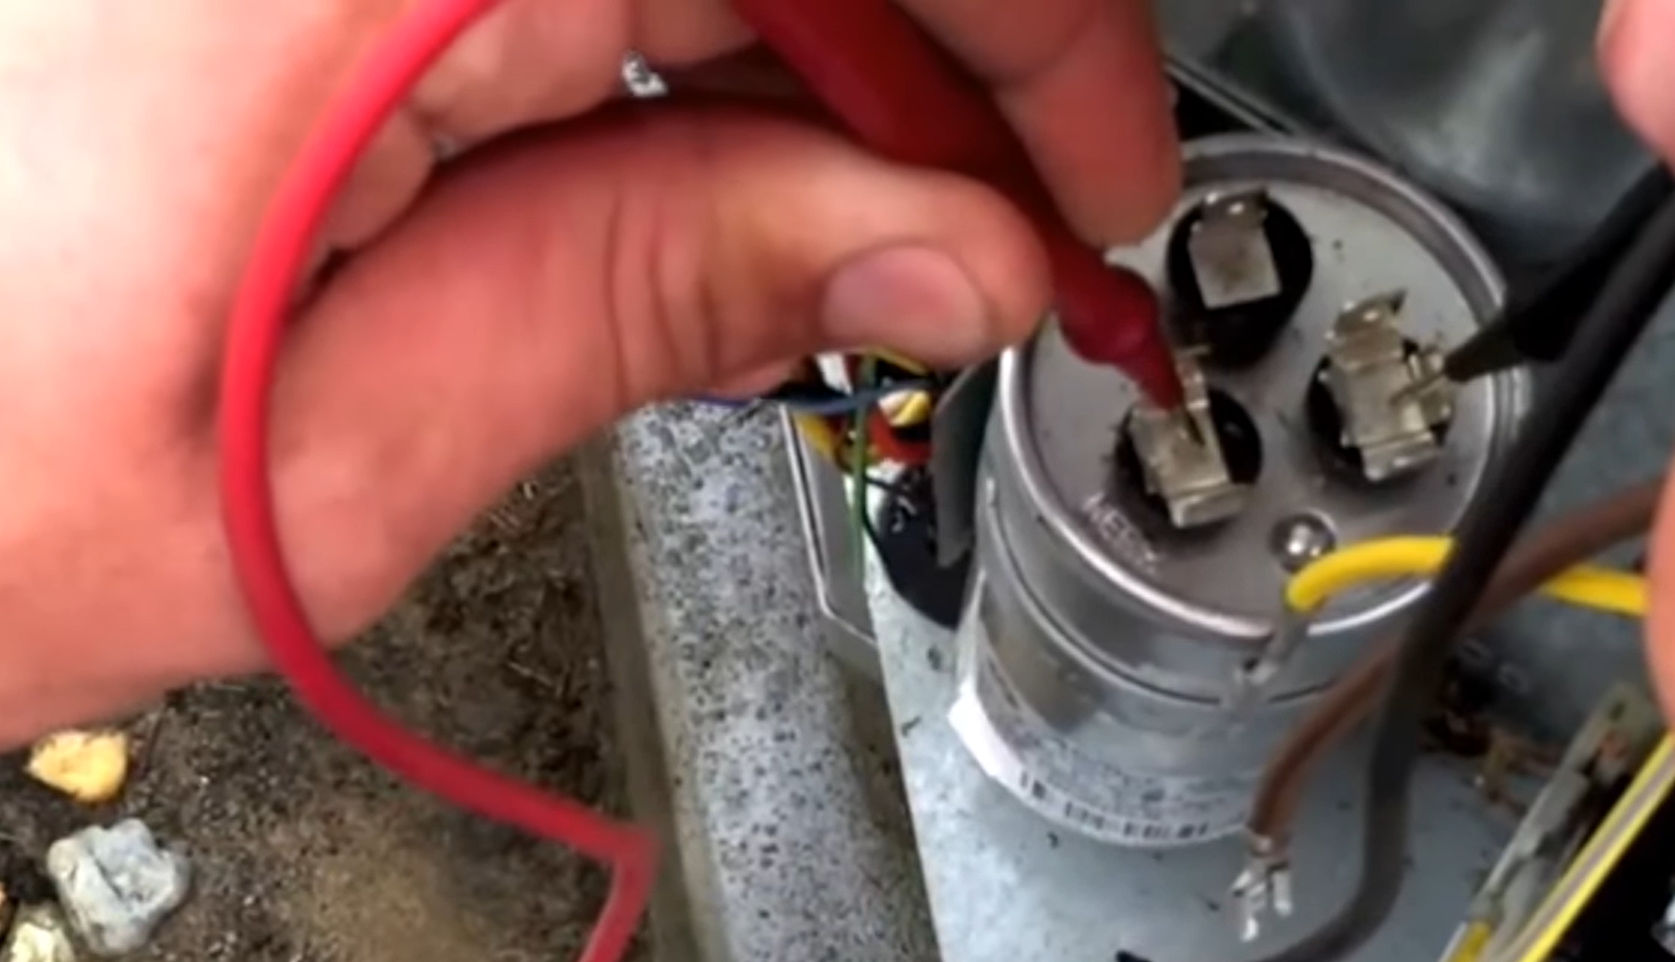 ac start capacitor wiring